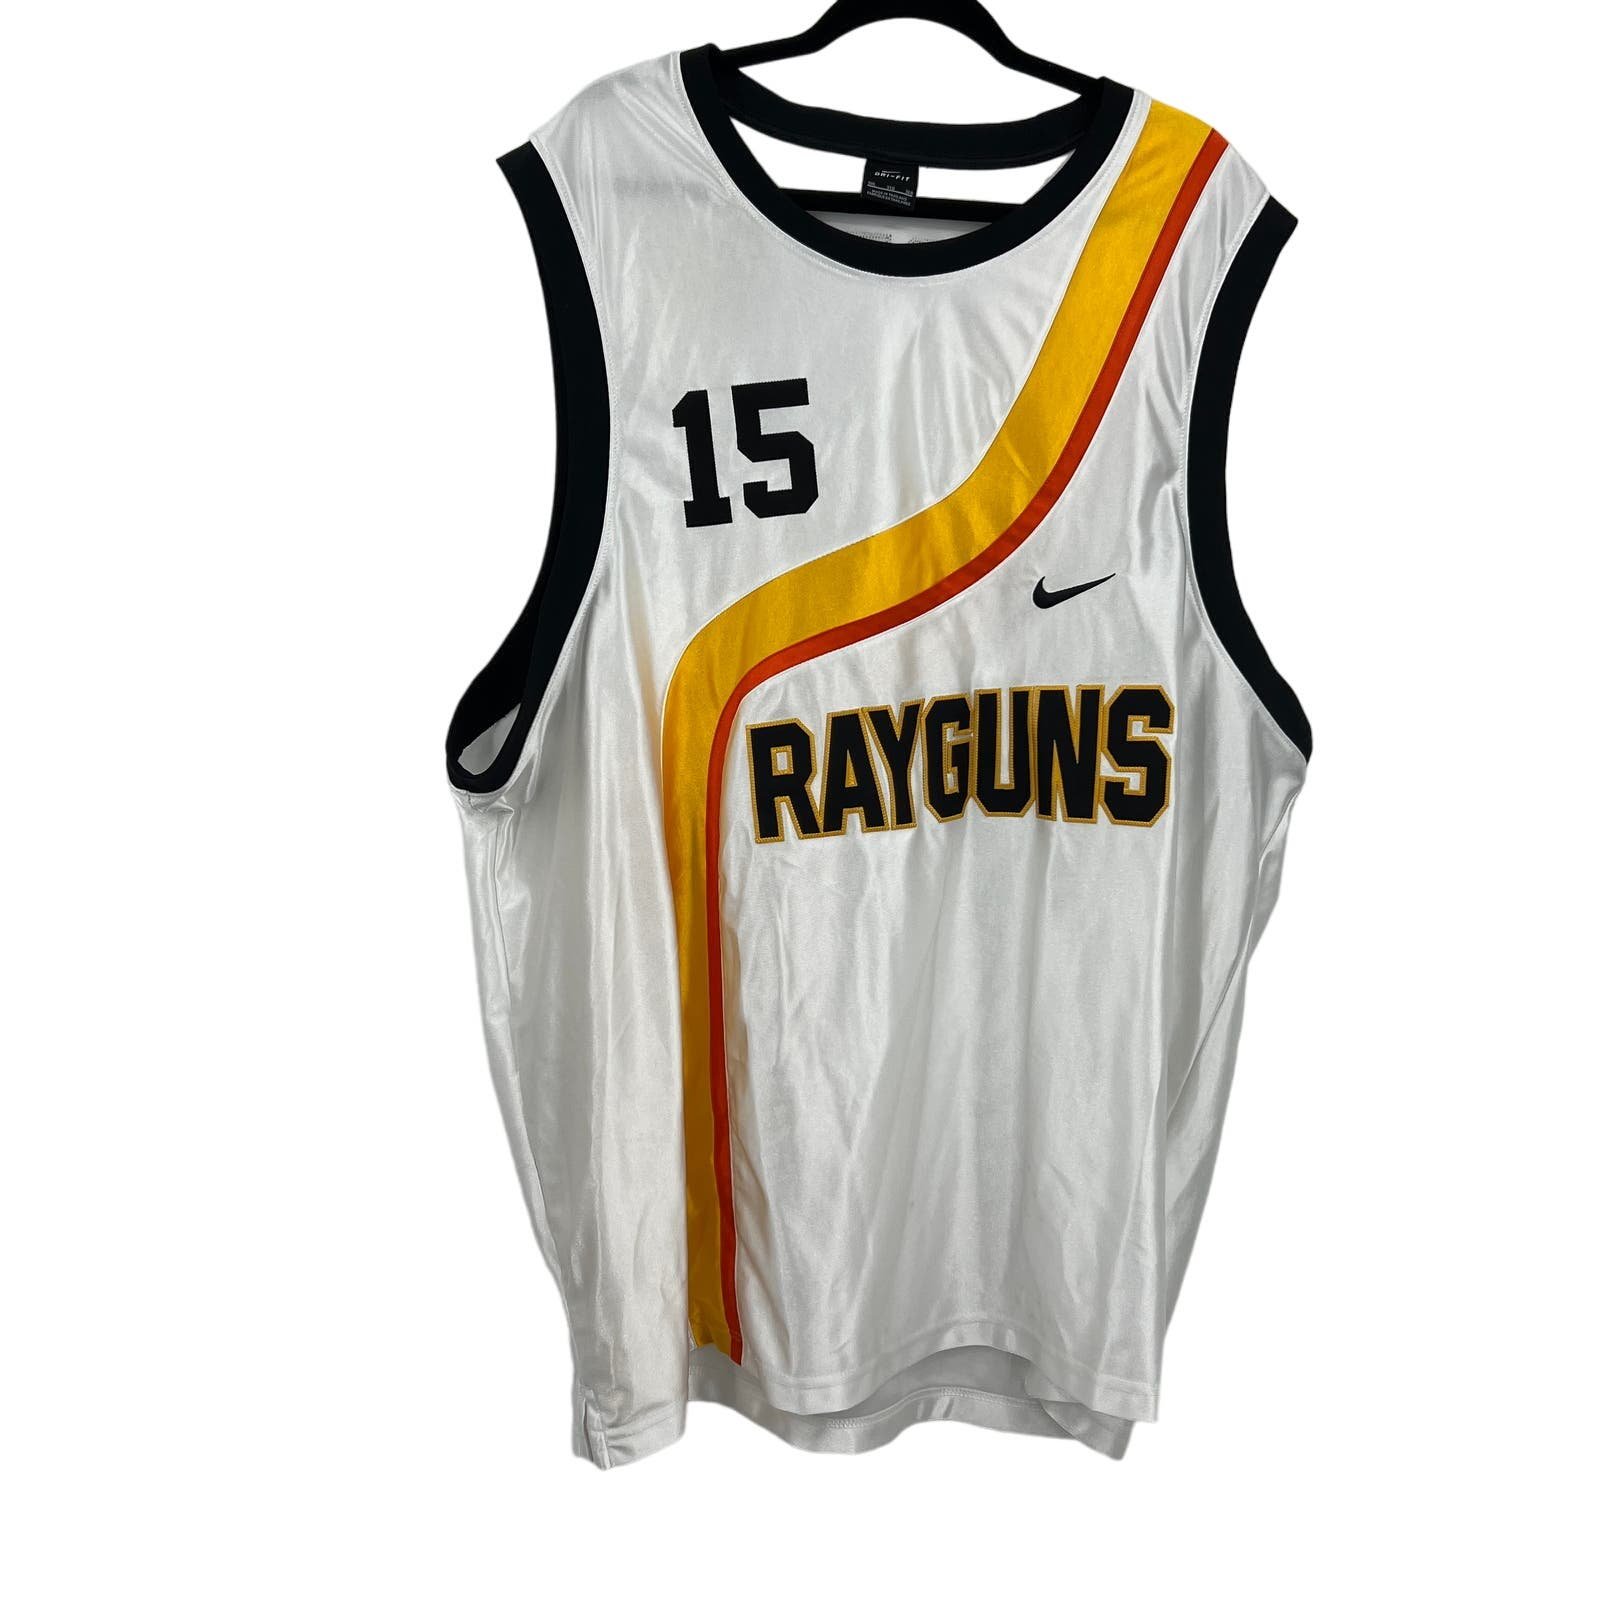 Nike White Basketball Jersey Vince Carter 15 Roswell Rayguns Men Size 3XL XXXL KjTjP4QuI